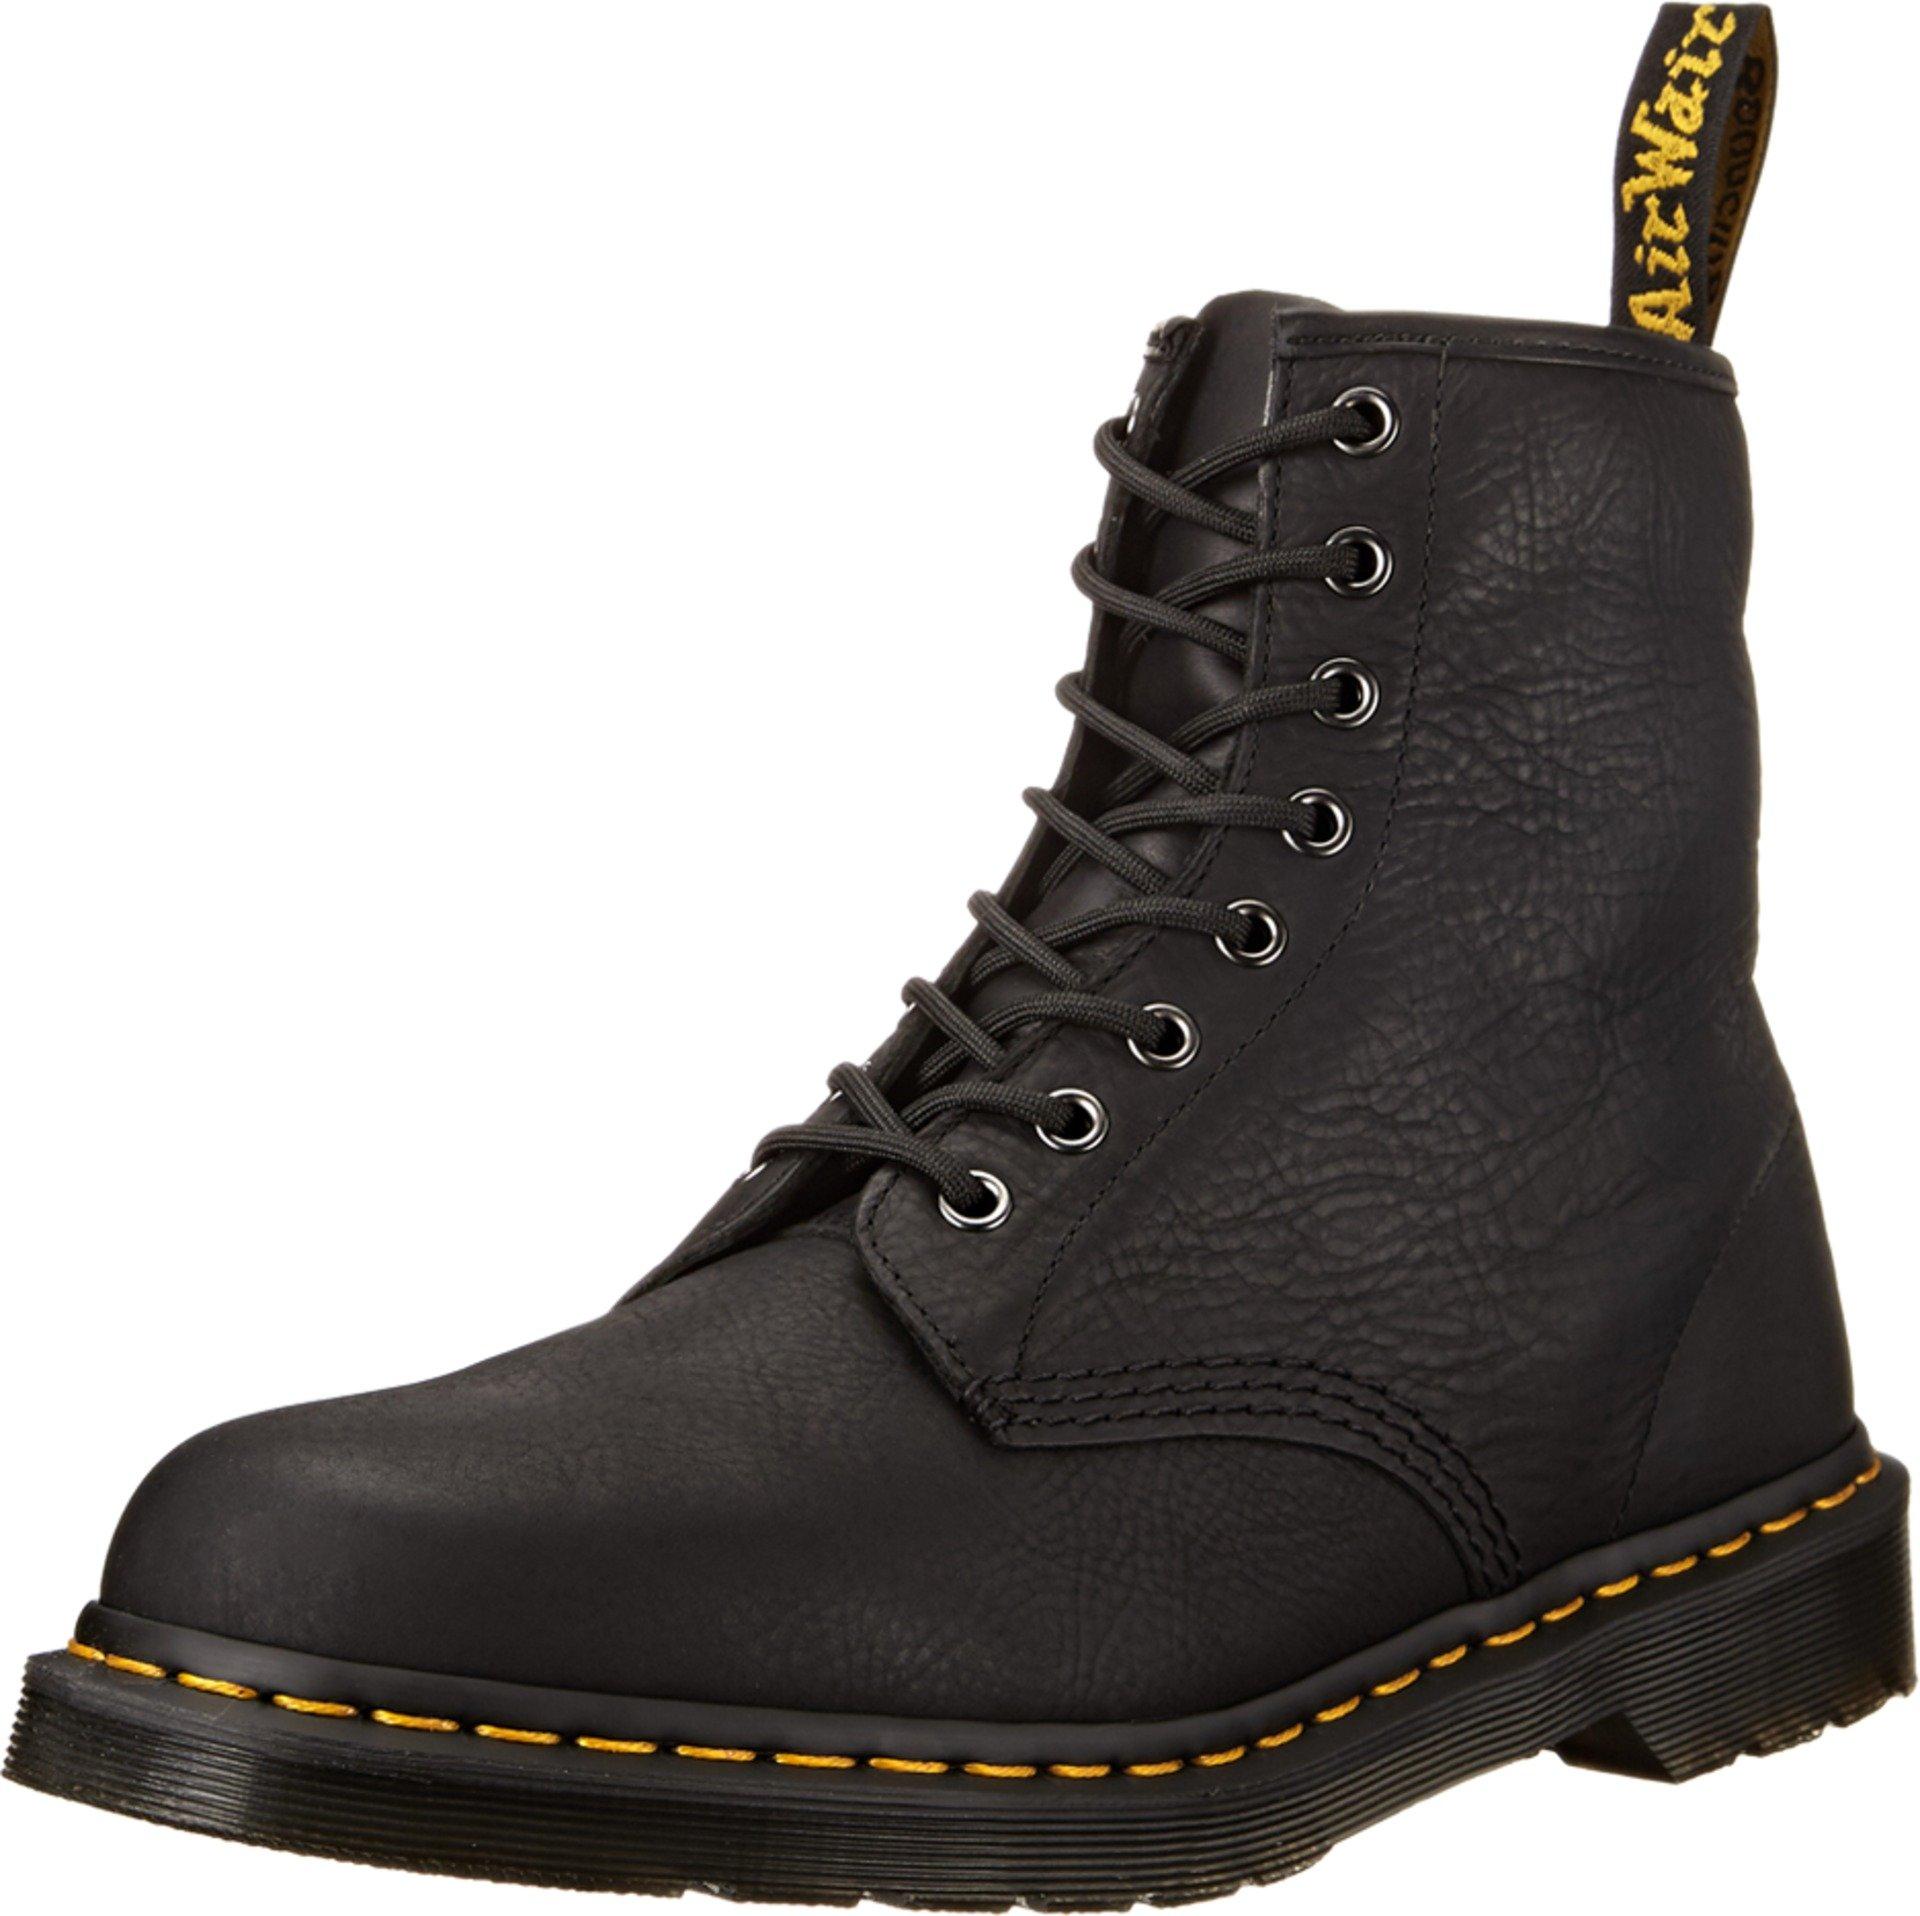 Dr. Martens 1460 8-eye Boot Soft Leather in Black for Men - Lyst